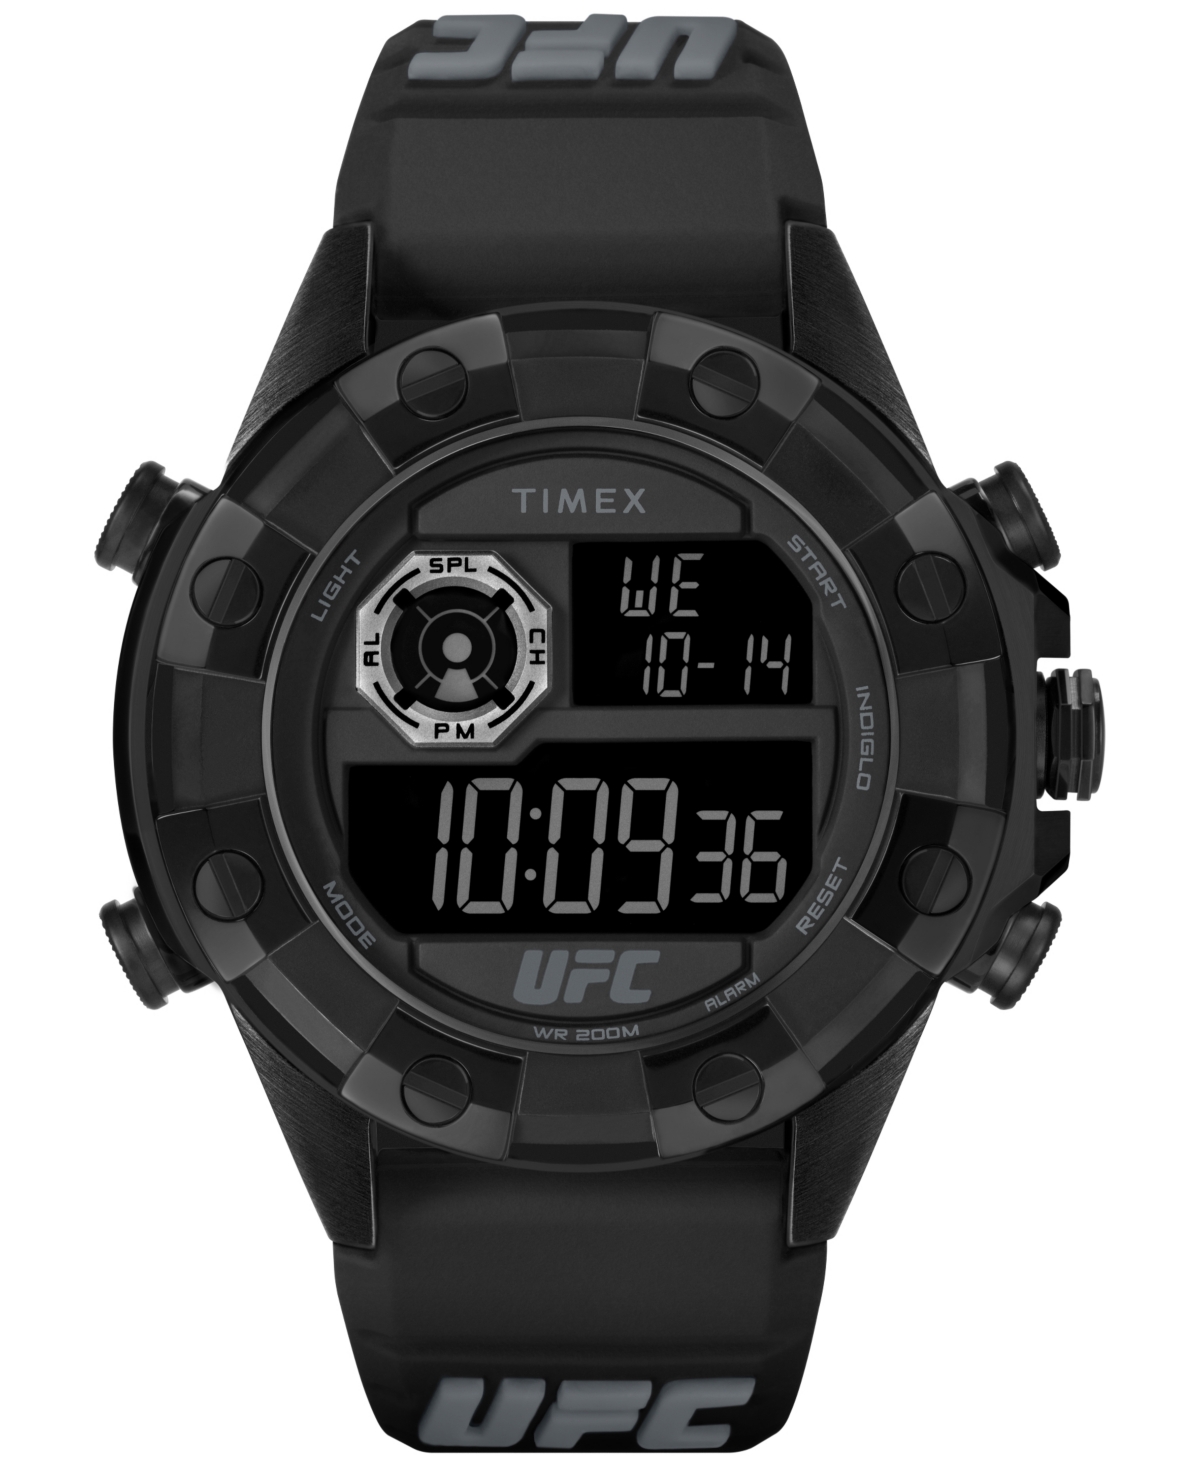 Ufc Men's Kick Digital Black Polyurethane Watch, 49mm - Black